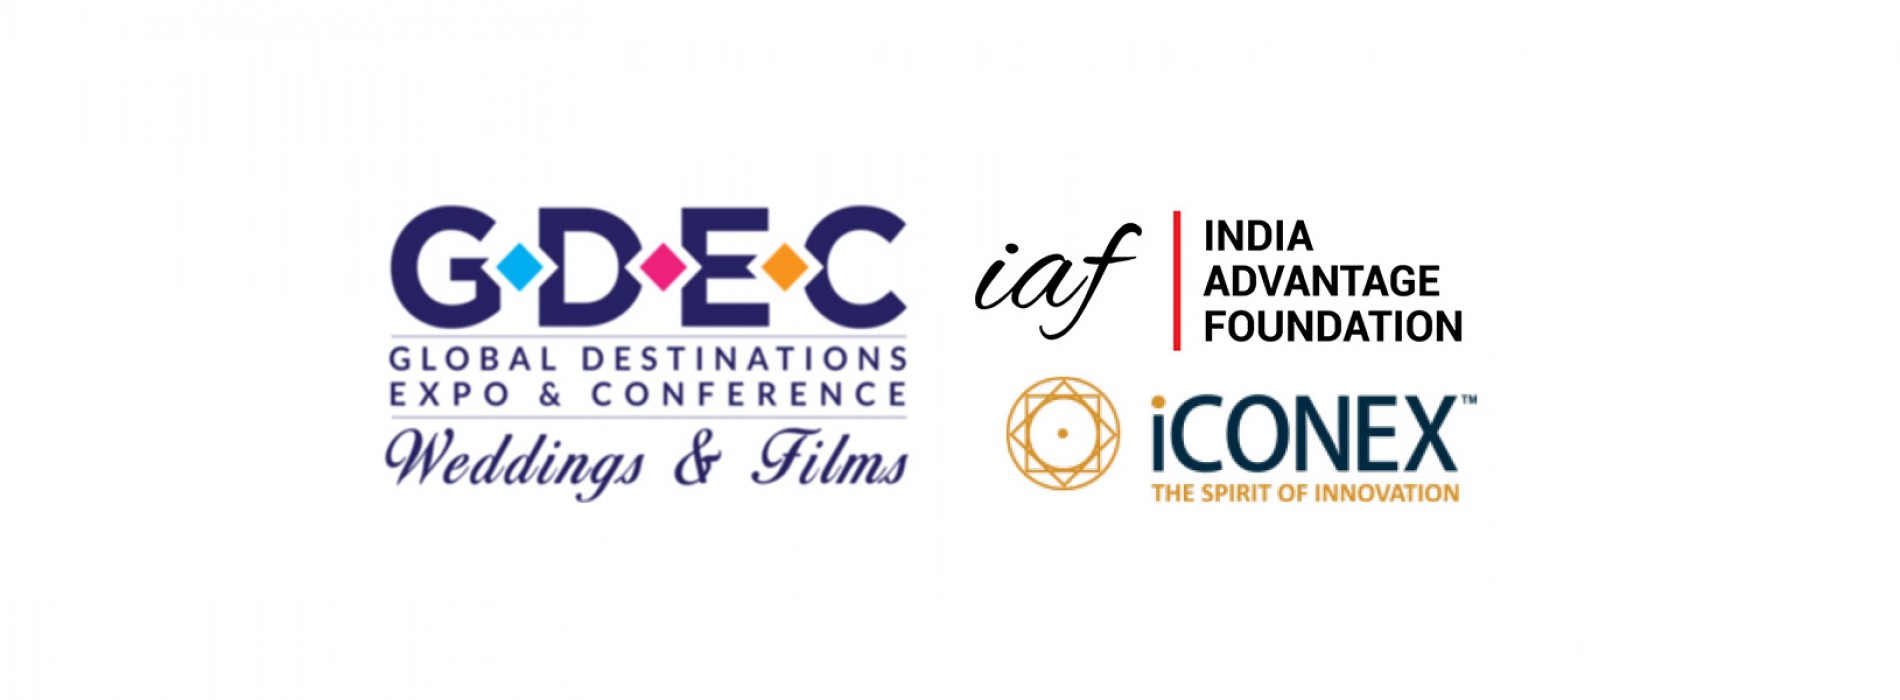 India Has Beautiful Locations for Destination Weddings & Film Shoots: GDEC